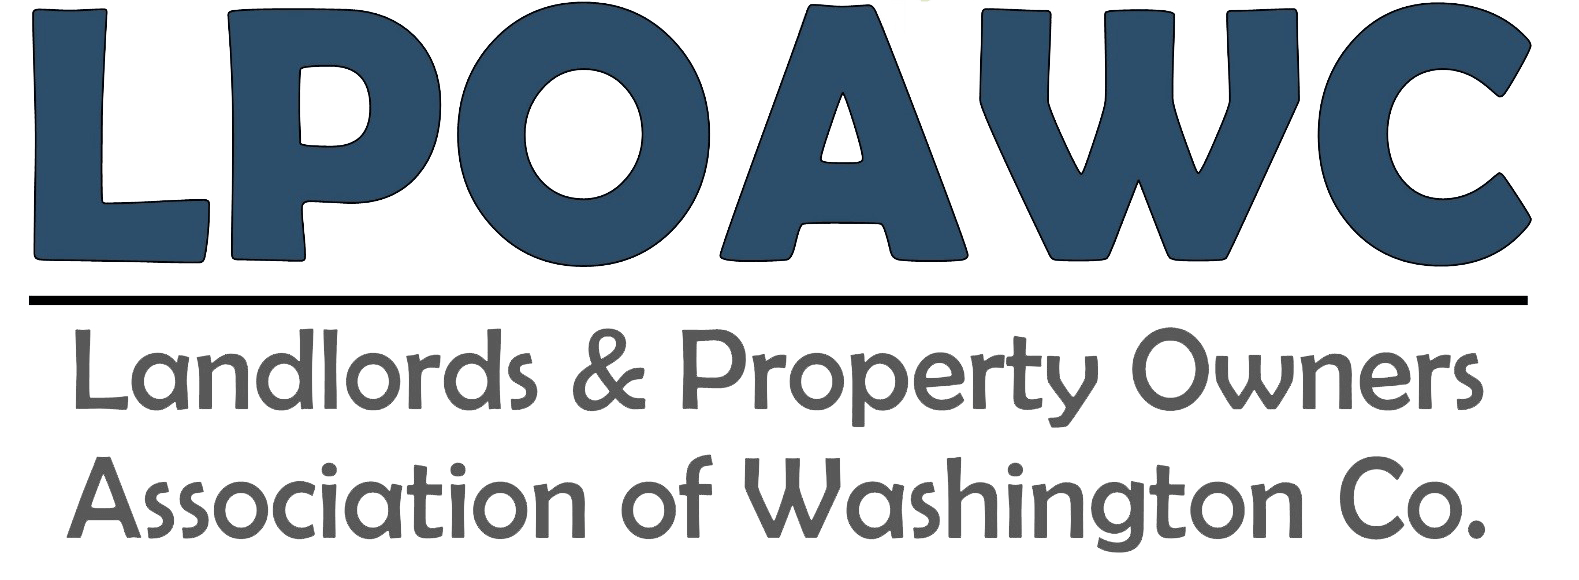 Landlords & Property Owners Association of Washington County & Western Maryland, Inc.